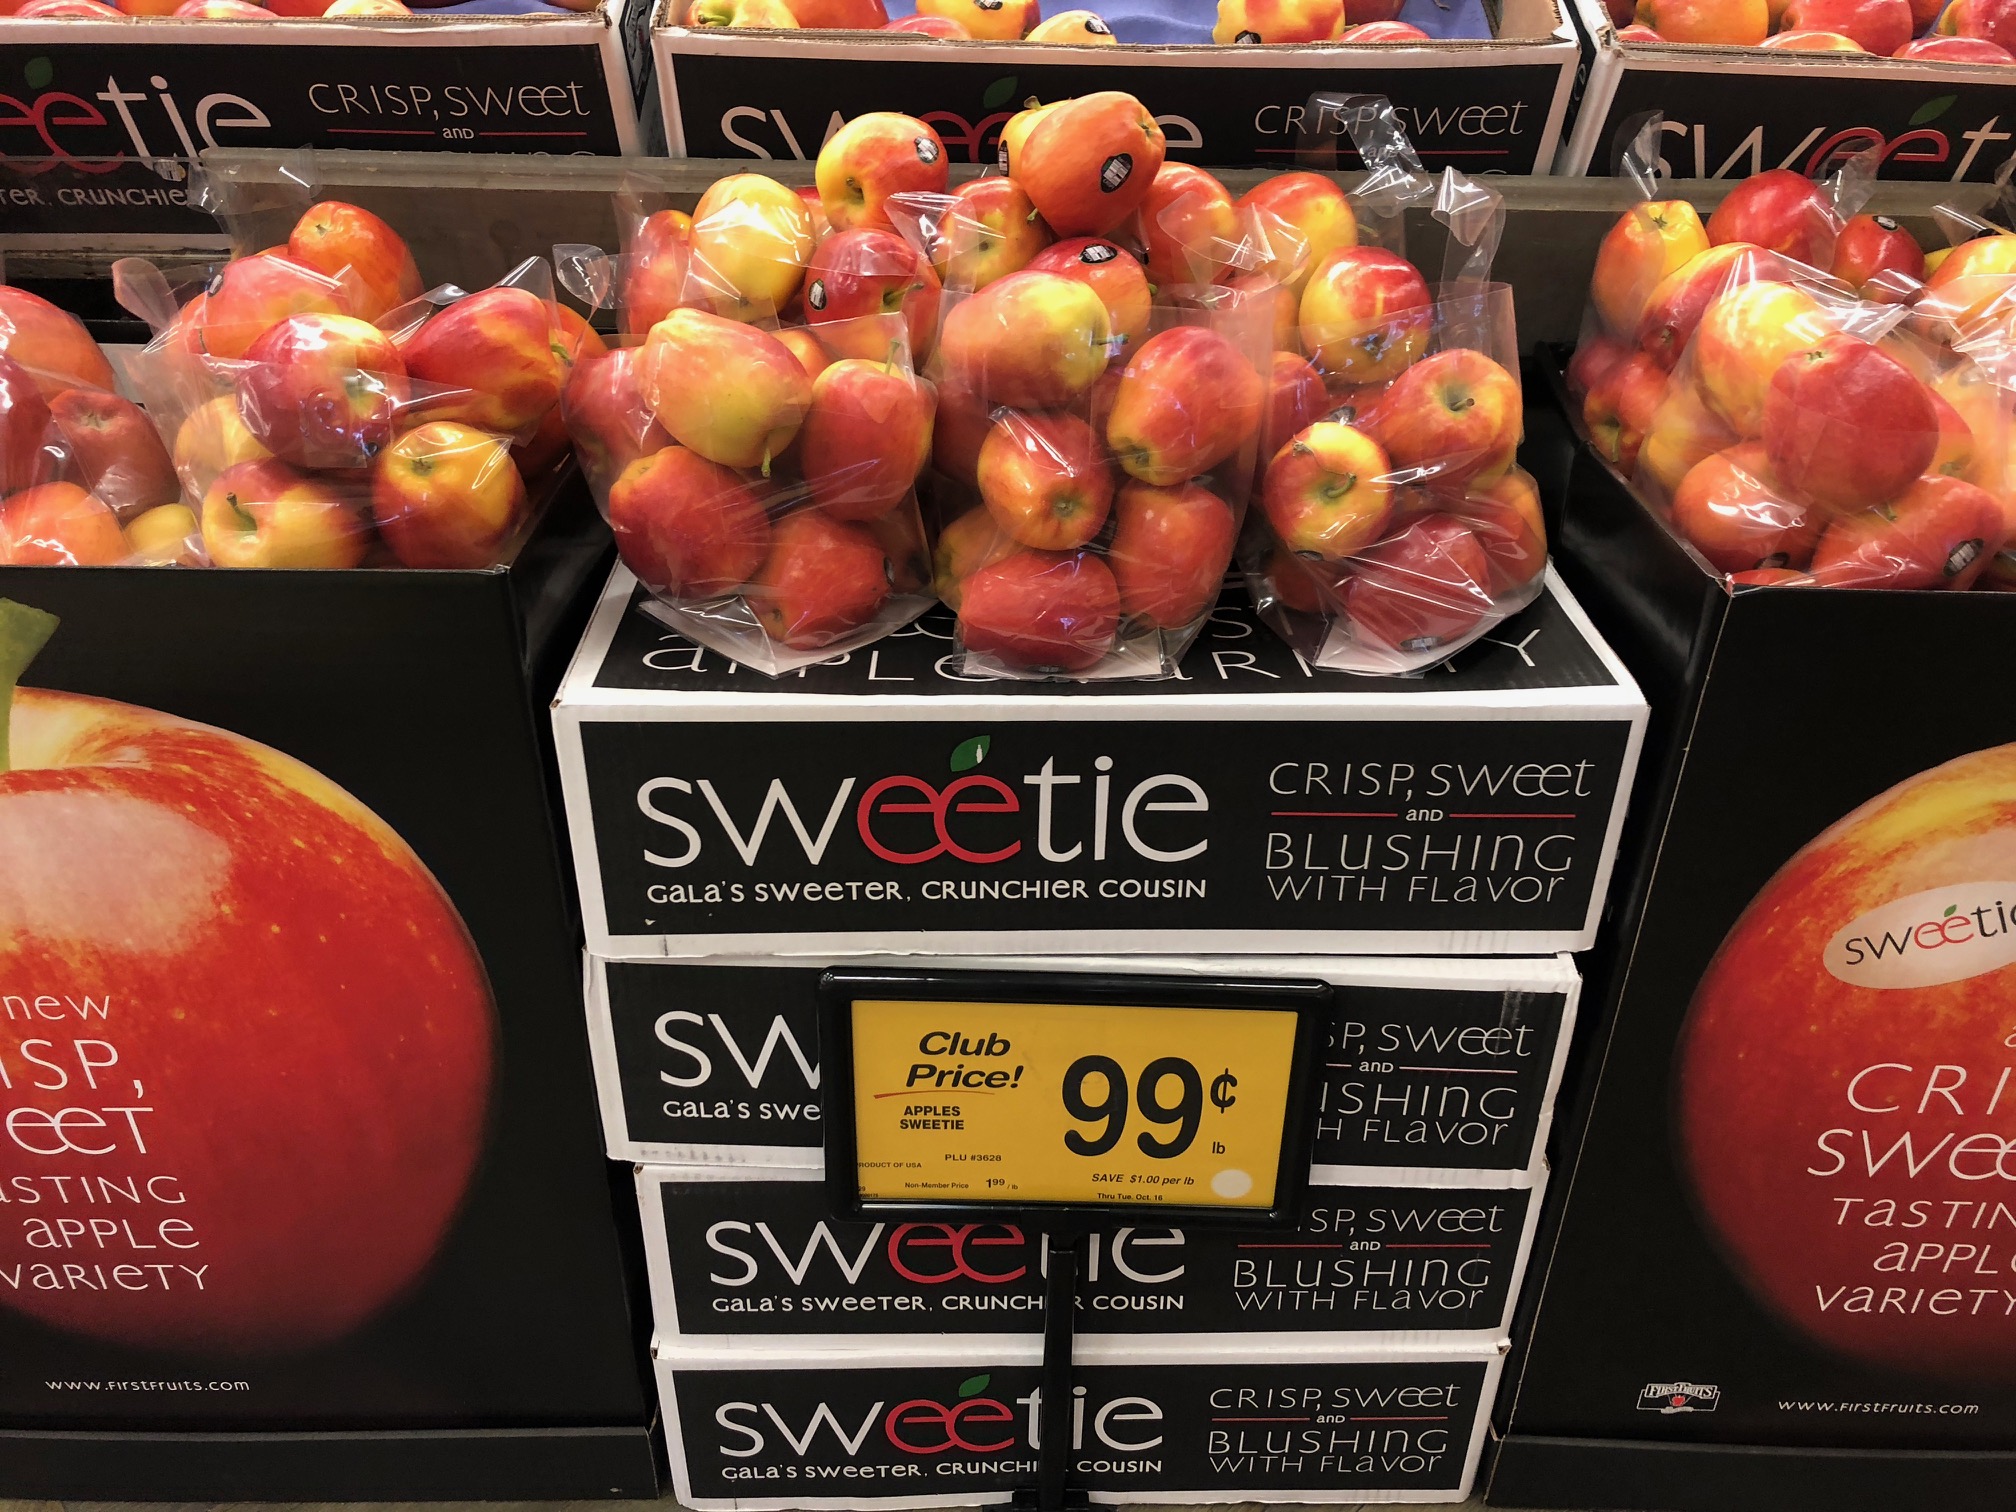 sweetie apples at Safeway